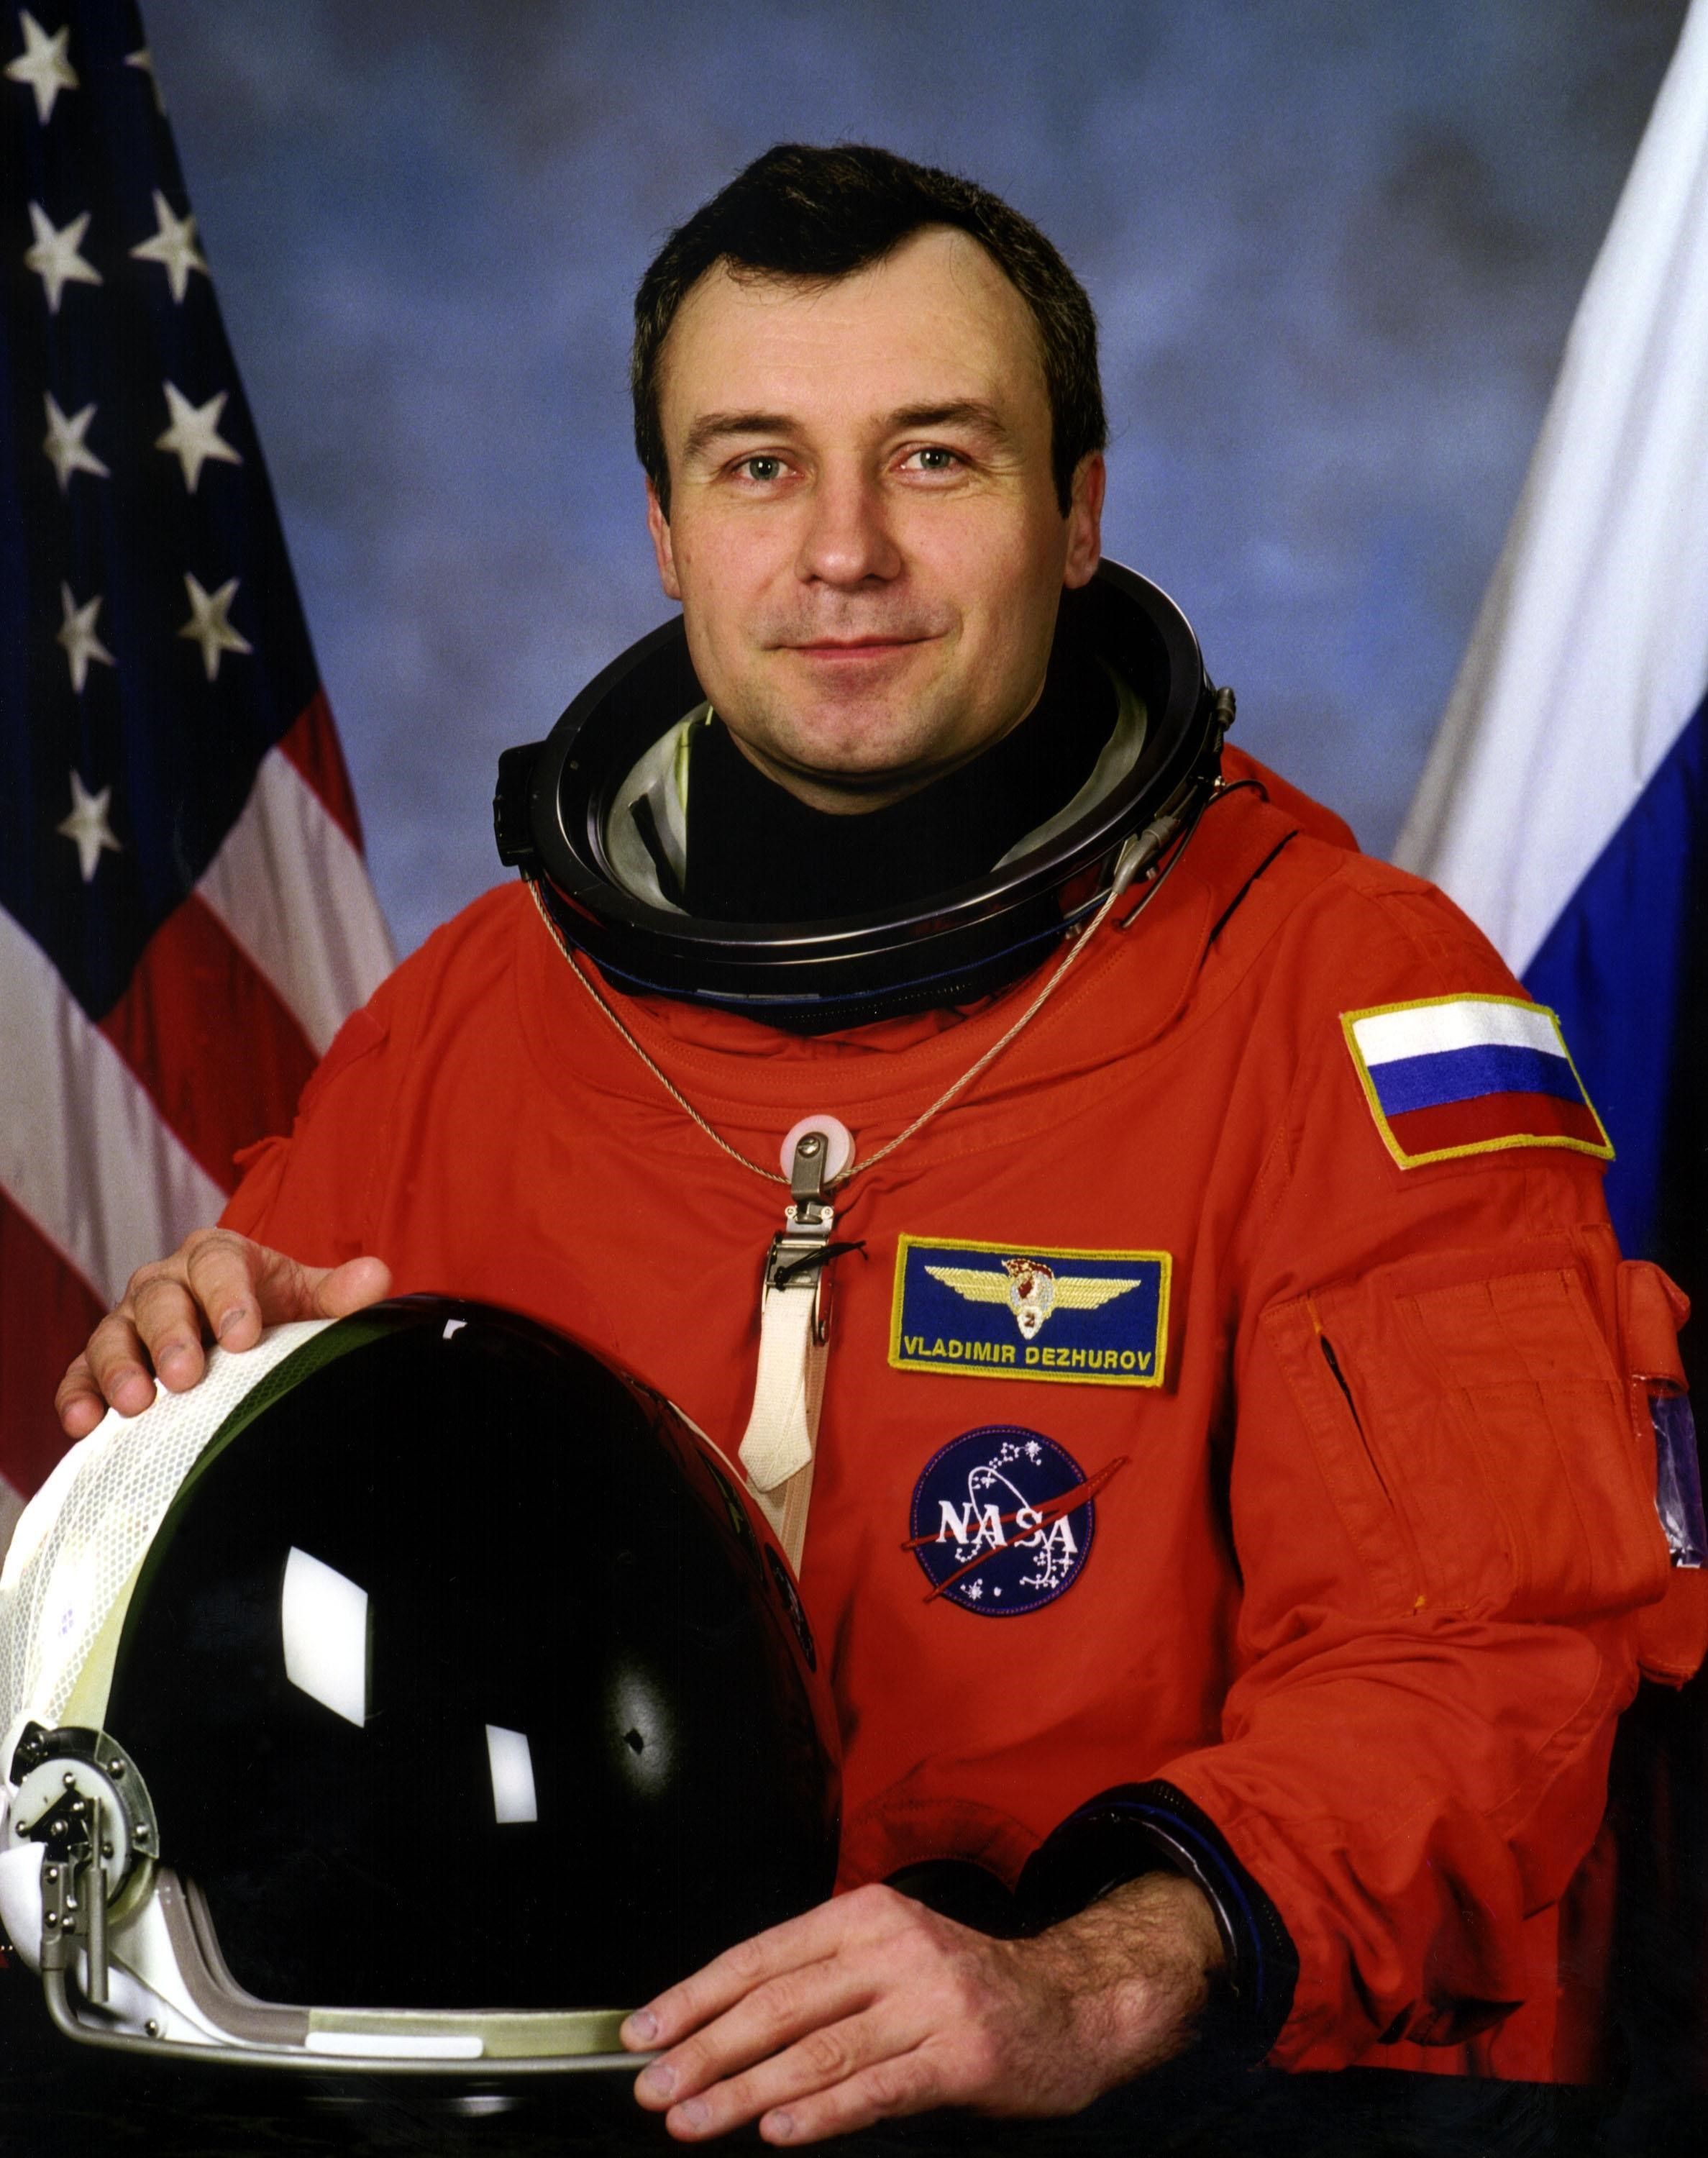 Vladimir N. Dezhurov